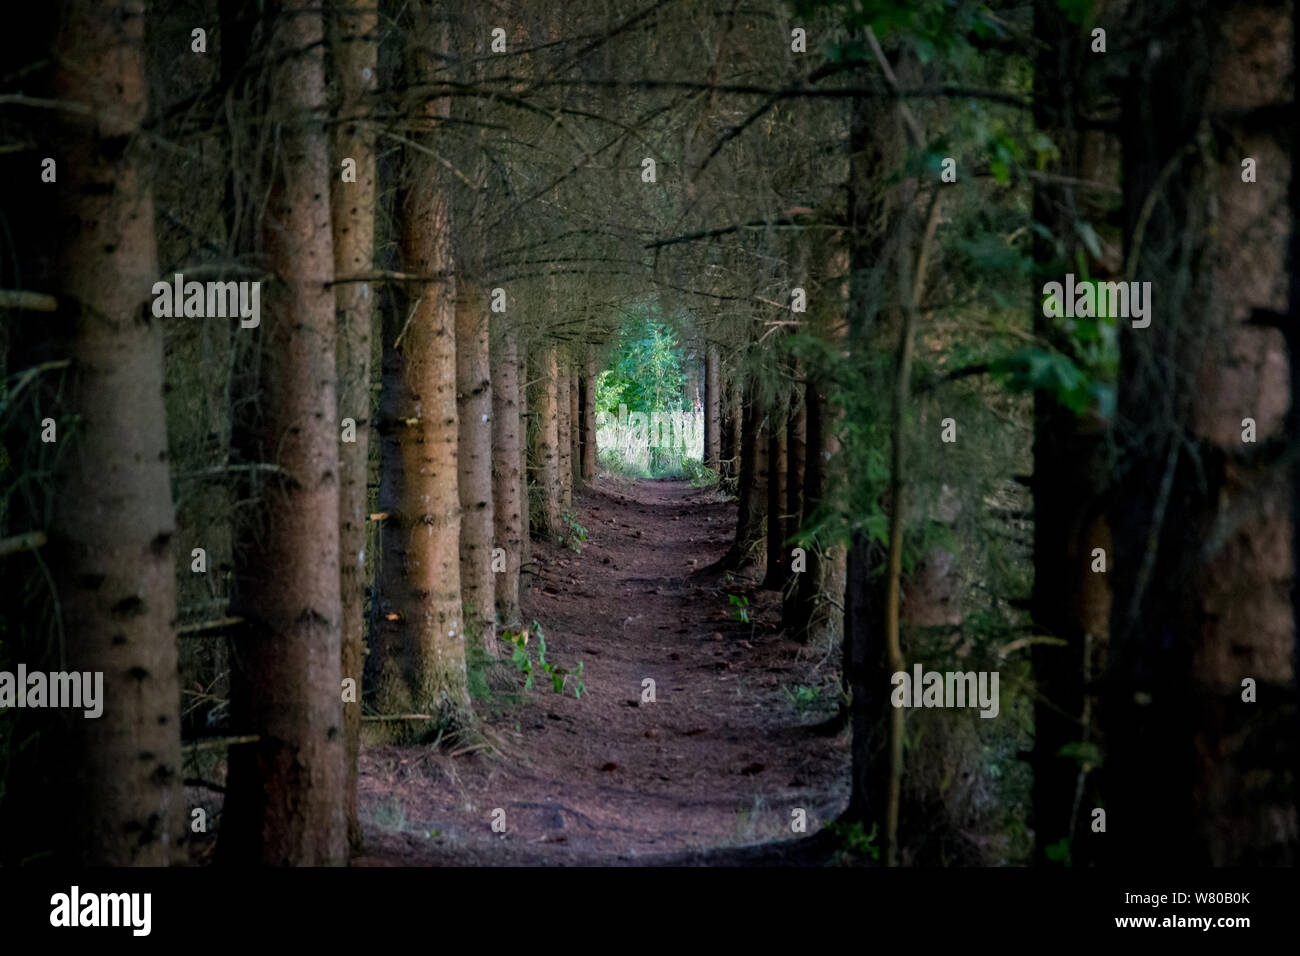 Pathway between evergreen trees Stock Photo